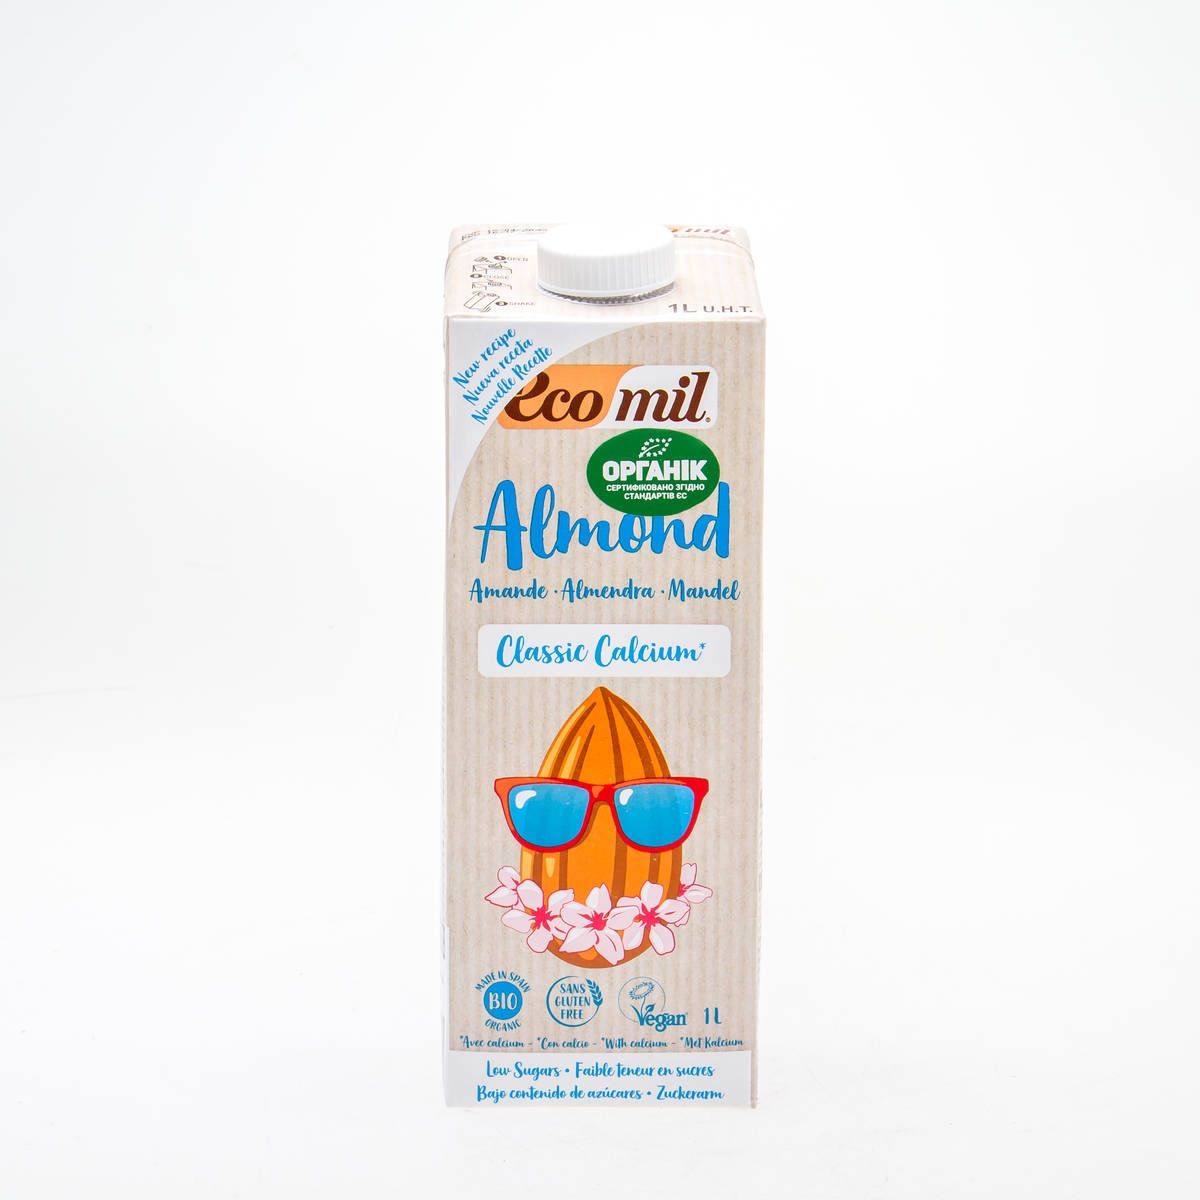 Органічне рослинне молоко з мигдалю з кальцієм, 1 л - купить в интернет-магазине Юнимед